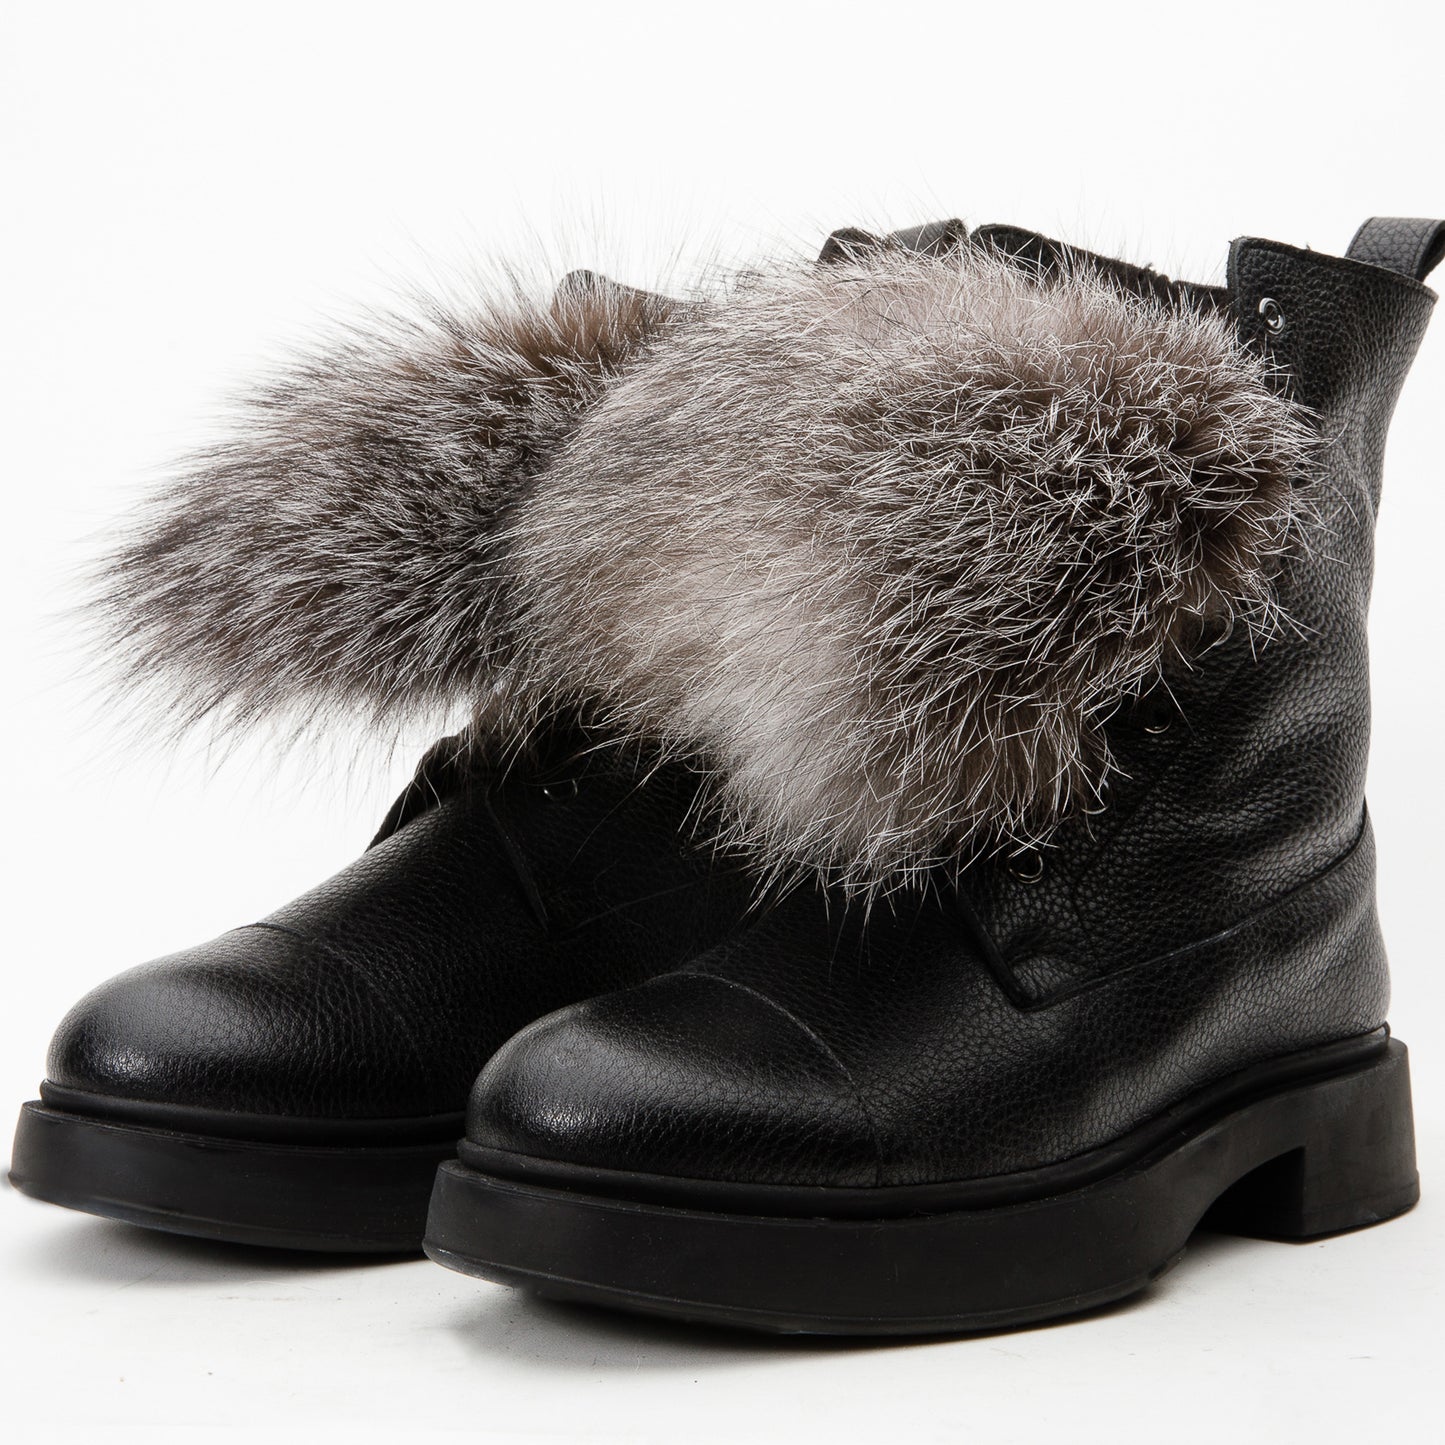 The Kajapati Black Leather Natural Fur Mid Calf Women Boot